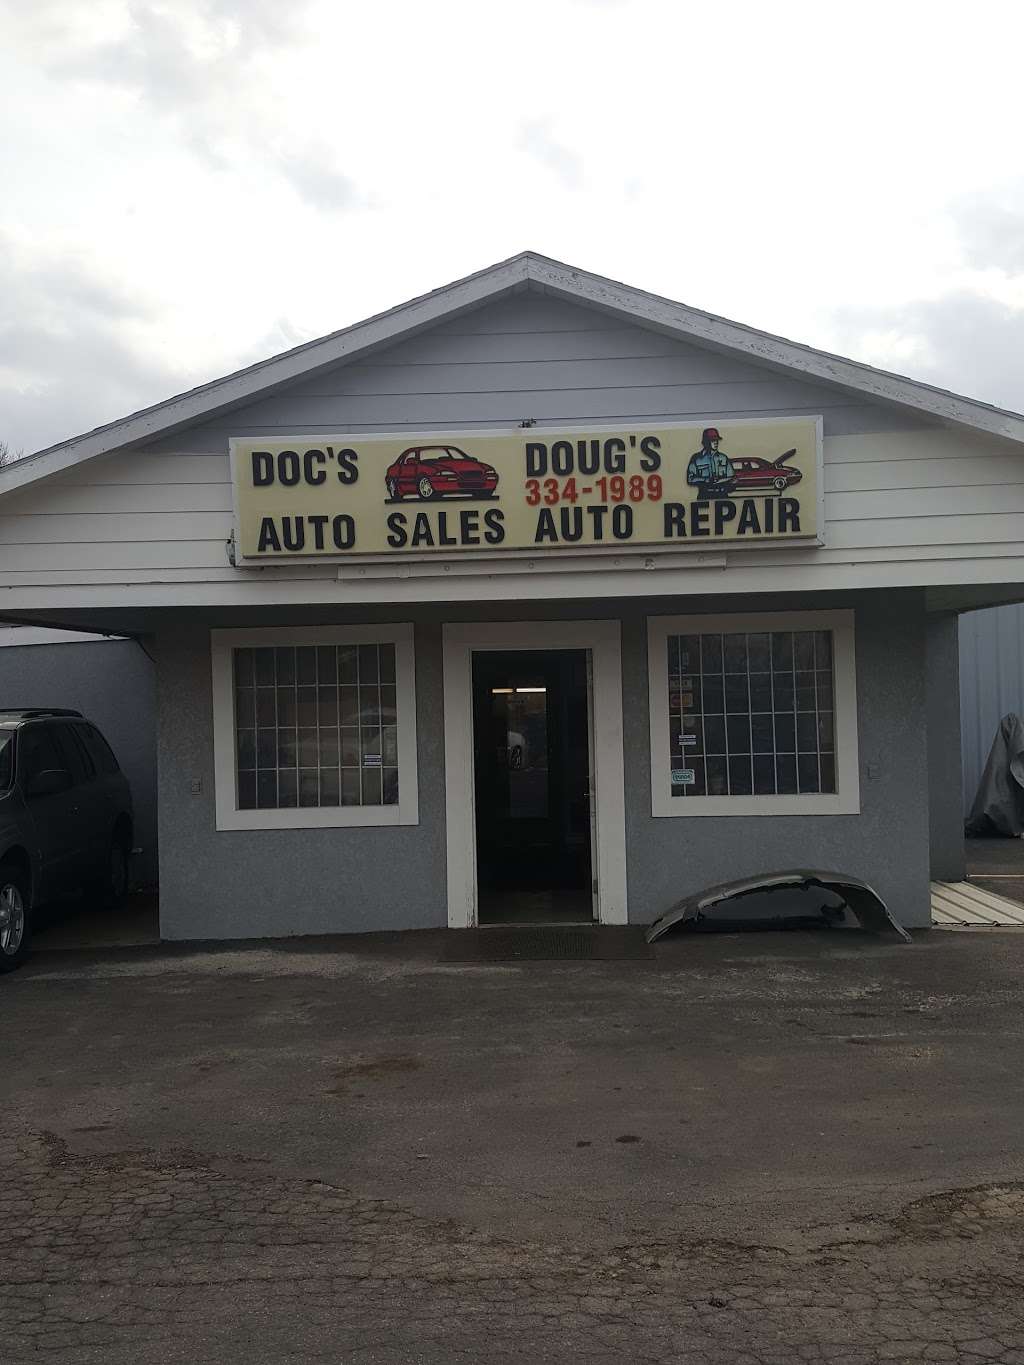 Dougs Auto Repair & Docs Auto Sales | 7629 Leavenworth Rd, Kansas City, KS 66109 | Phone: (913) 334-1989